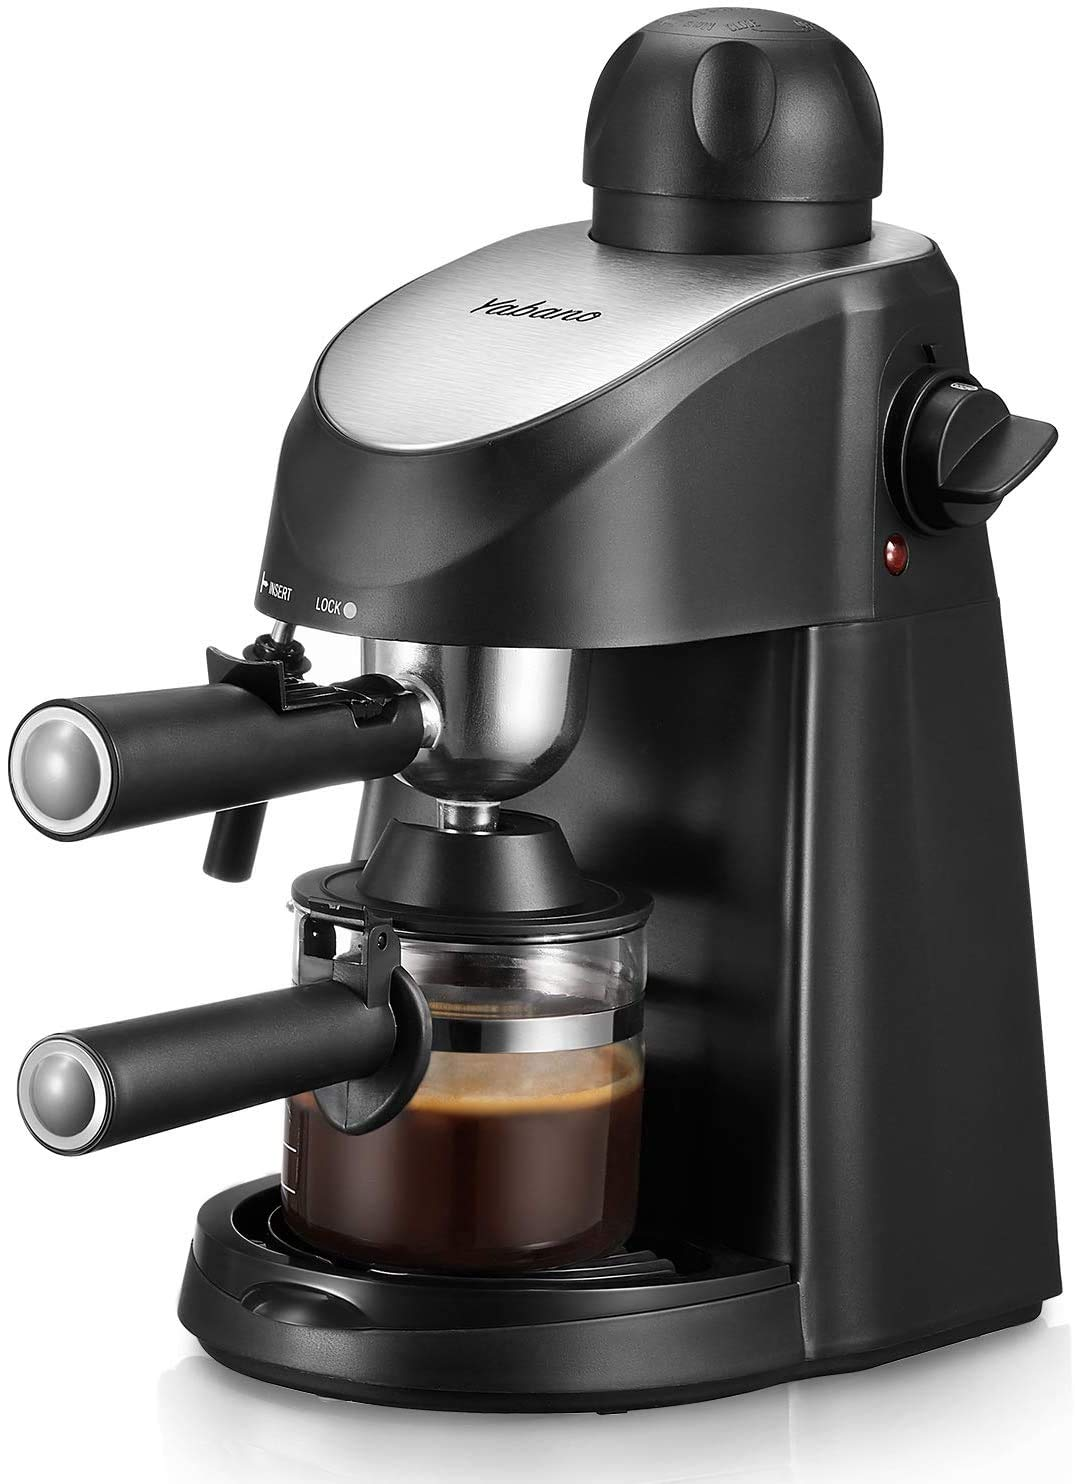 Yabano Espresso Machine for Beginners